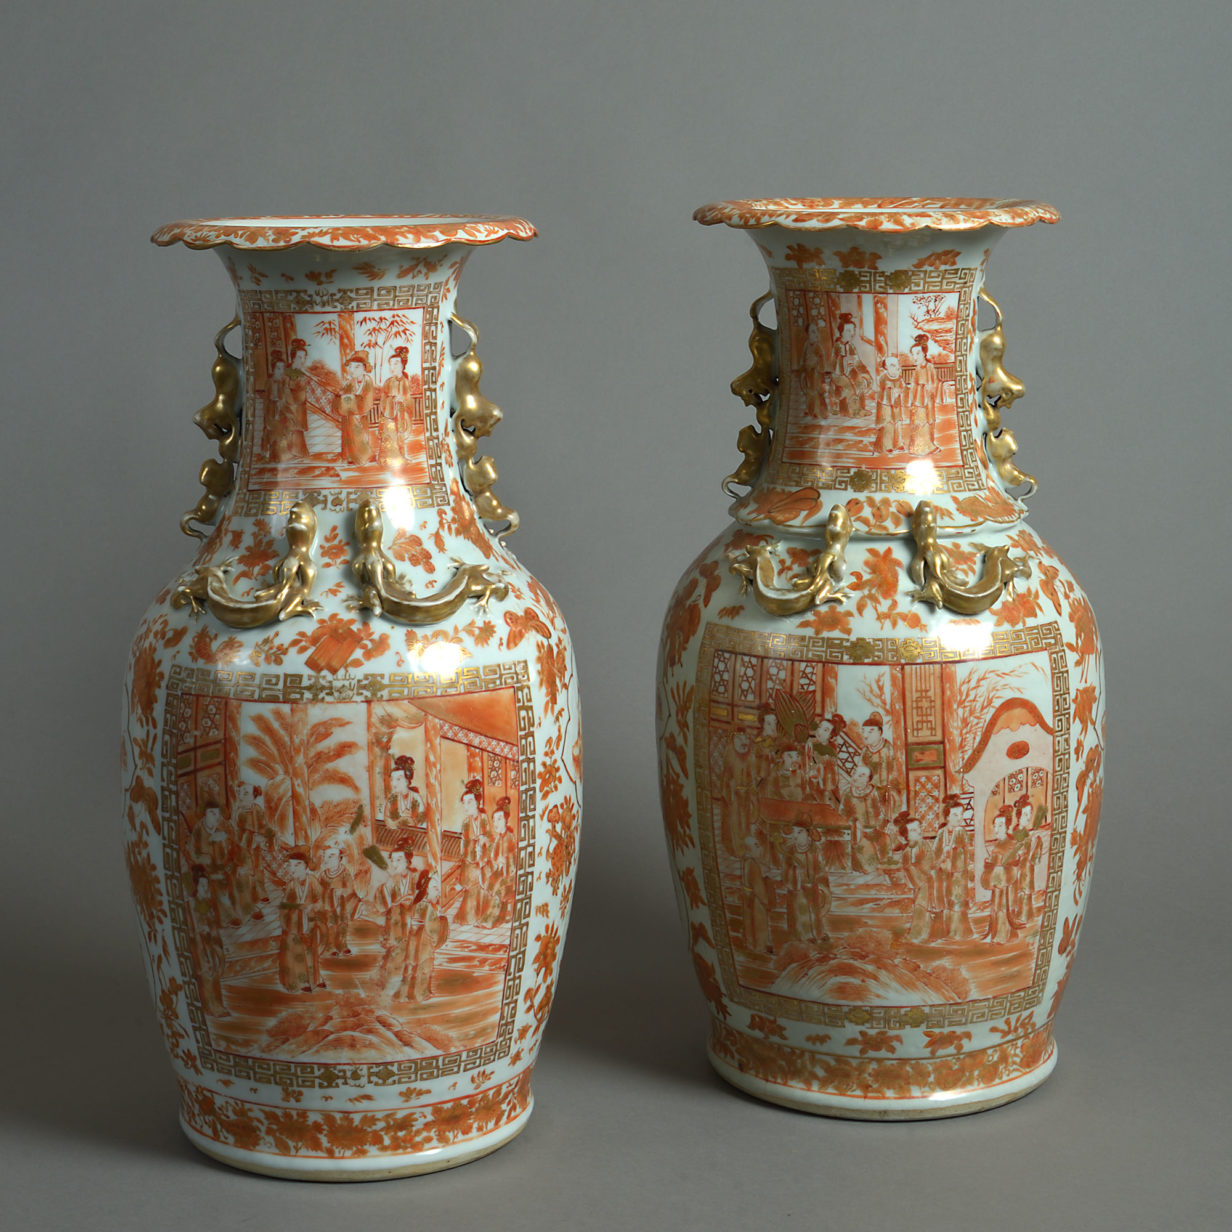 19th century pair of baluster porcelain vases